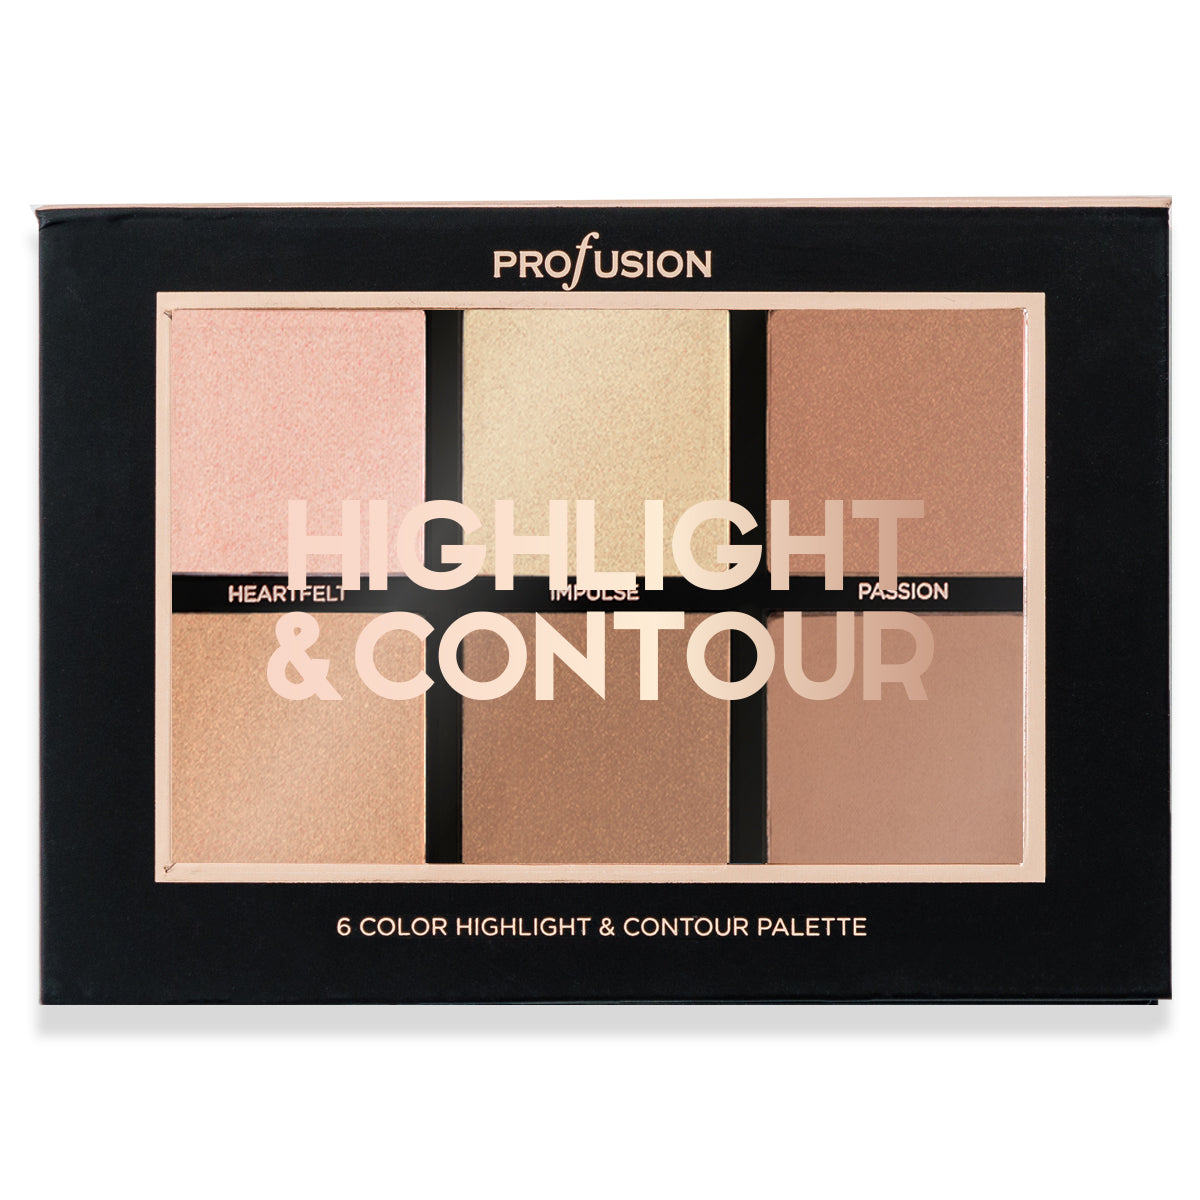 Profusion Highlight & Contour - Buy Makeup Online! - Profusion